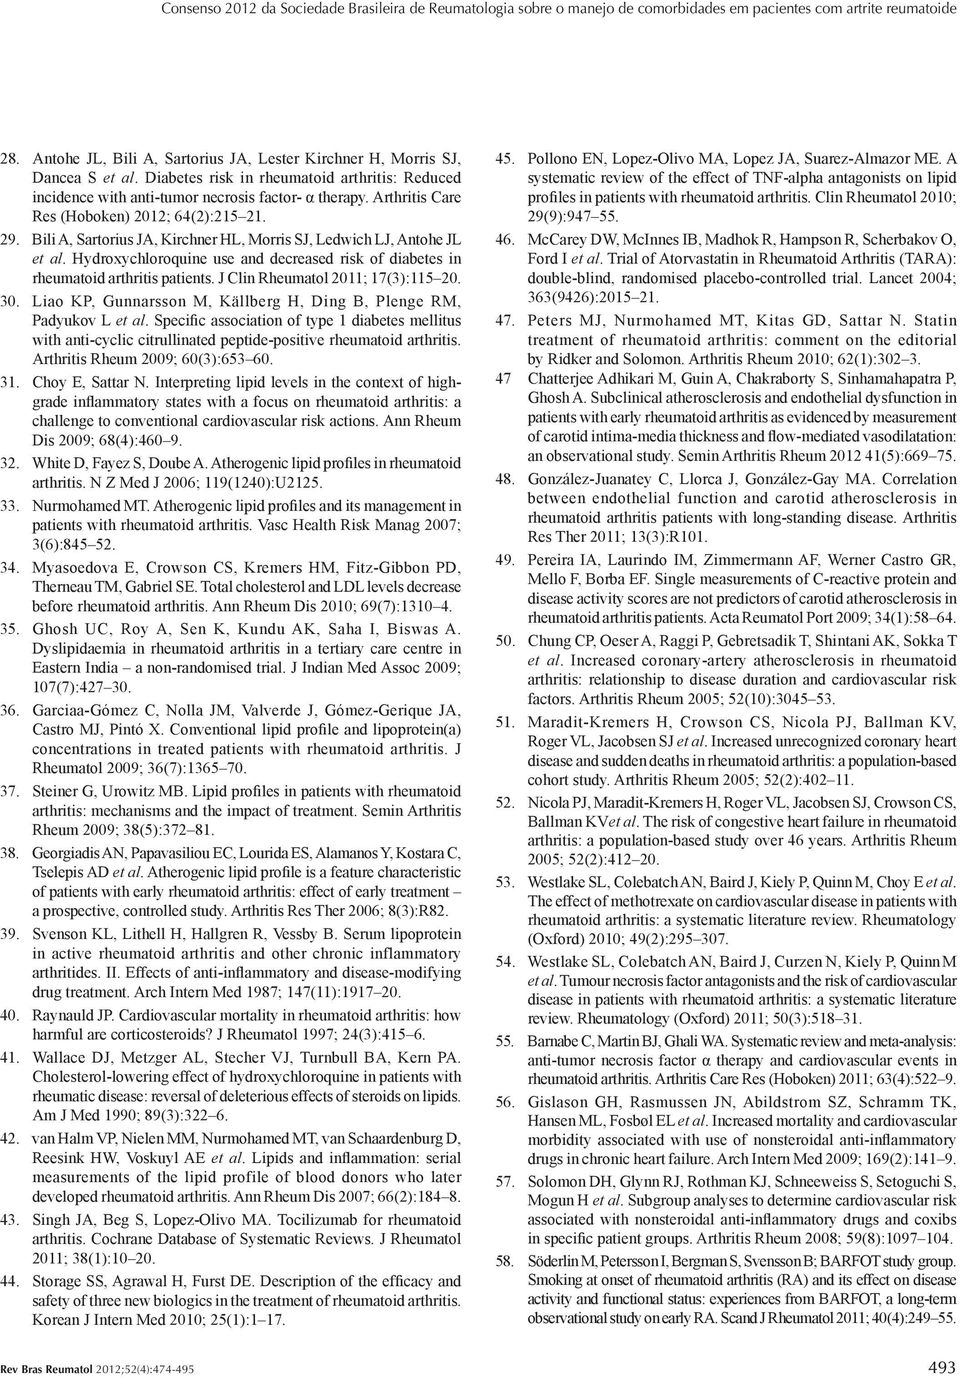 Arthritis Care Res (Hoboken) 2012; 64(2):215 21. 29. Bili A, Sartorius JA, Kirchner HL, Morris SJ, Ledwich LJ, Antohe JL et al.